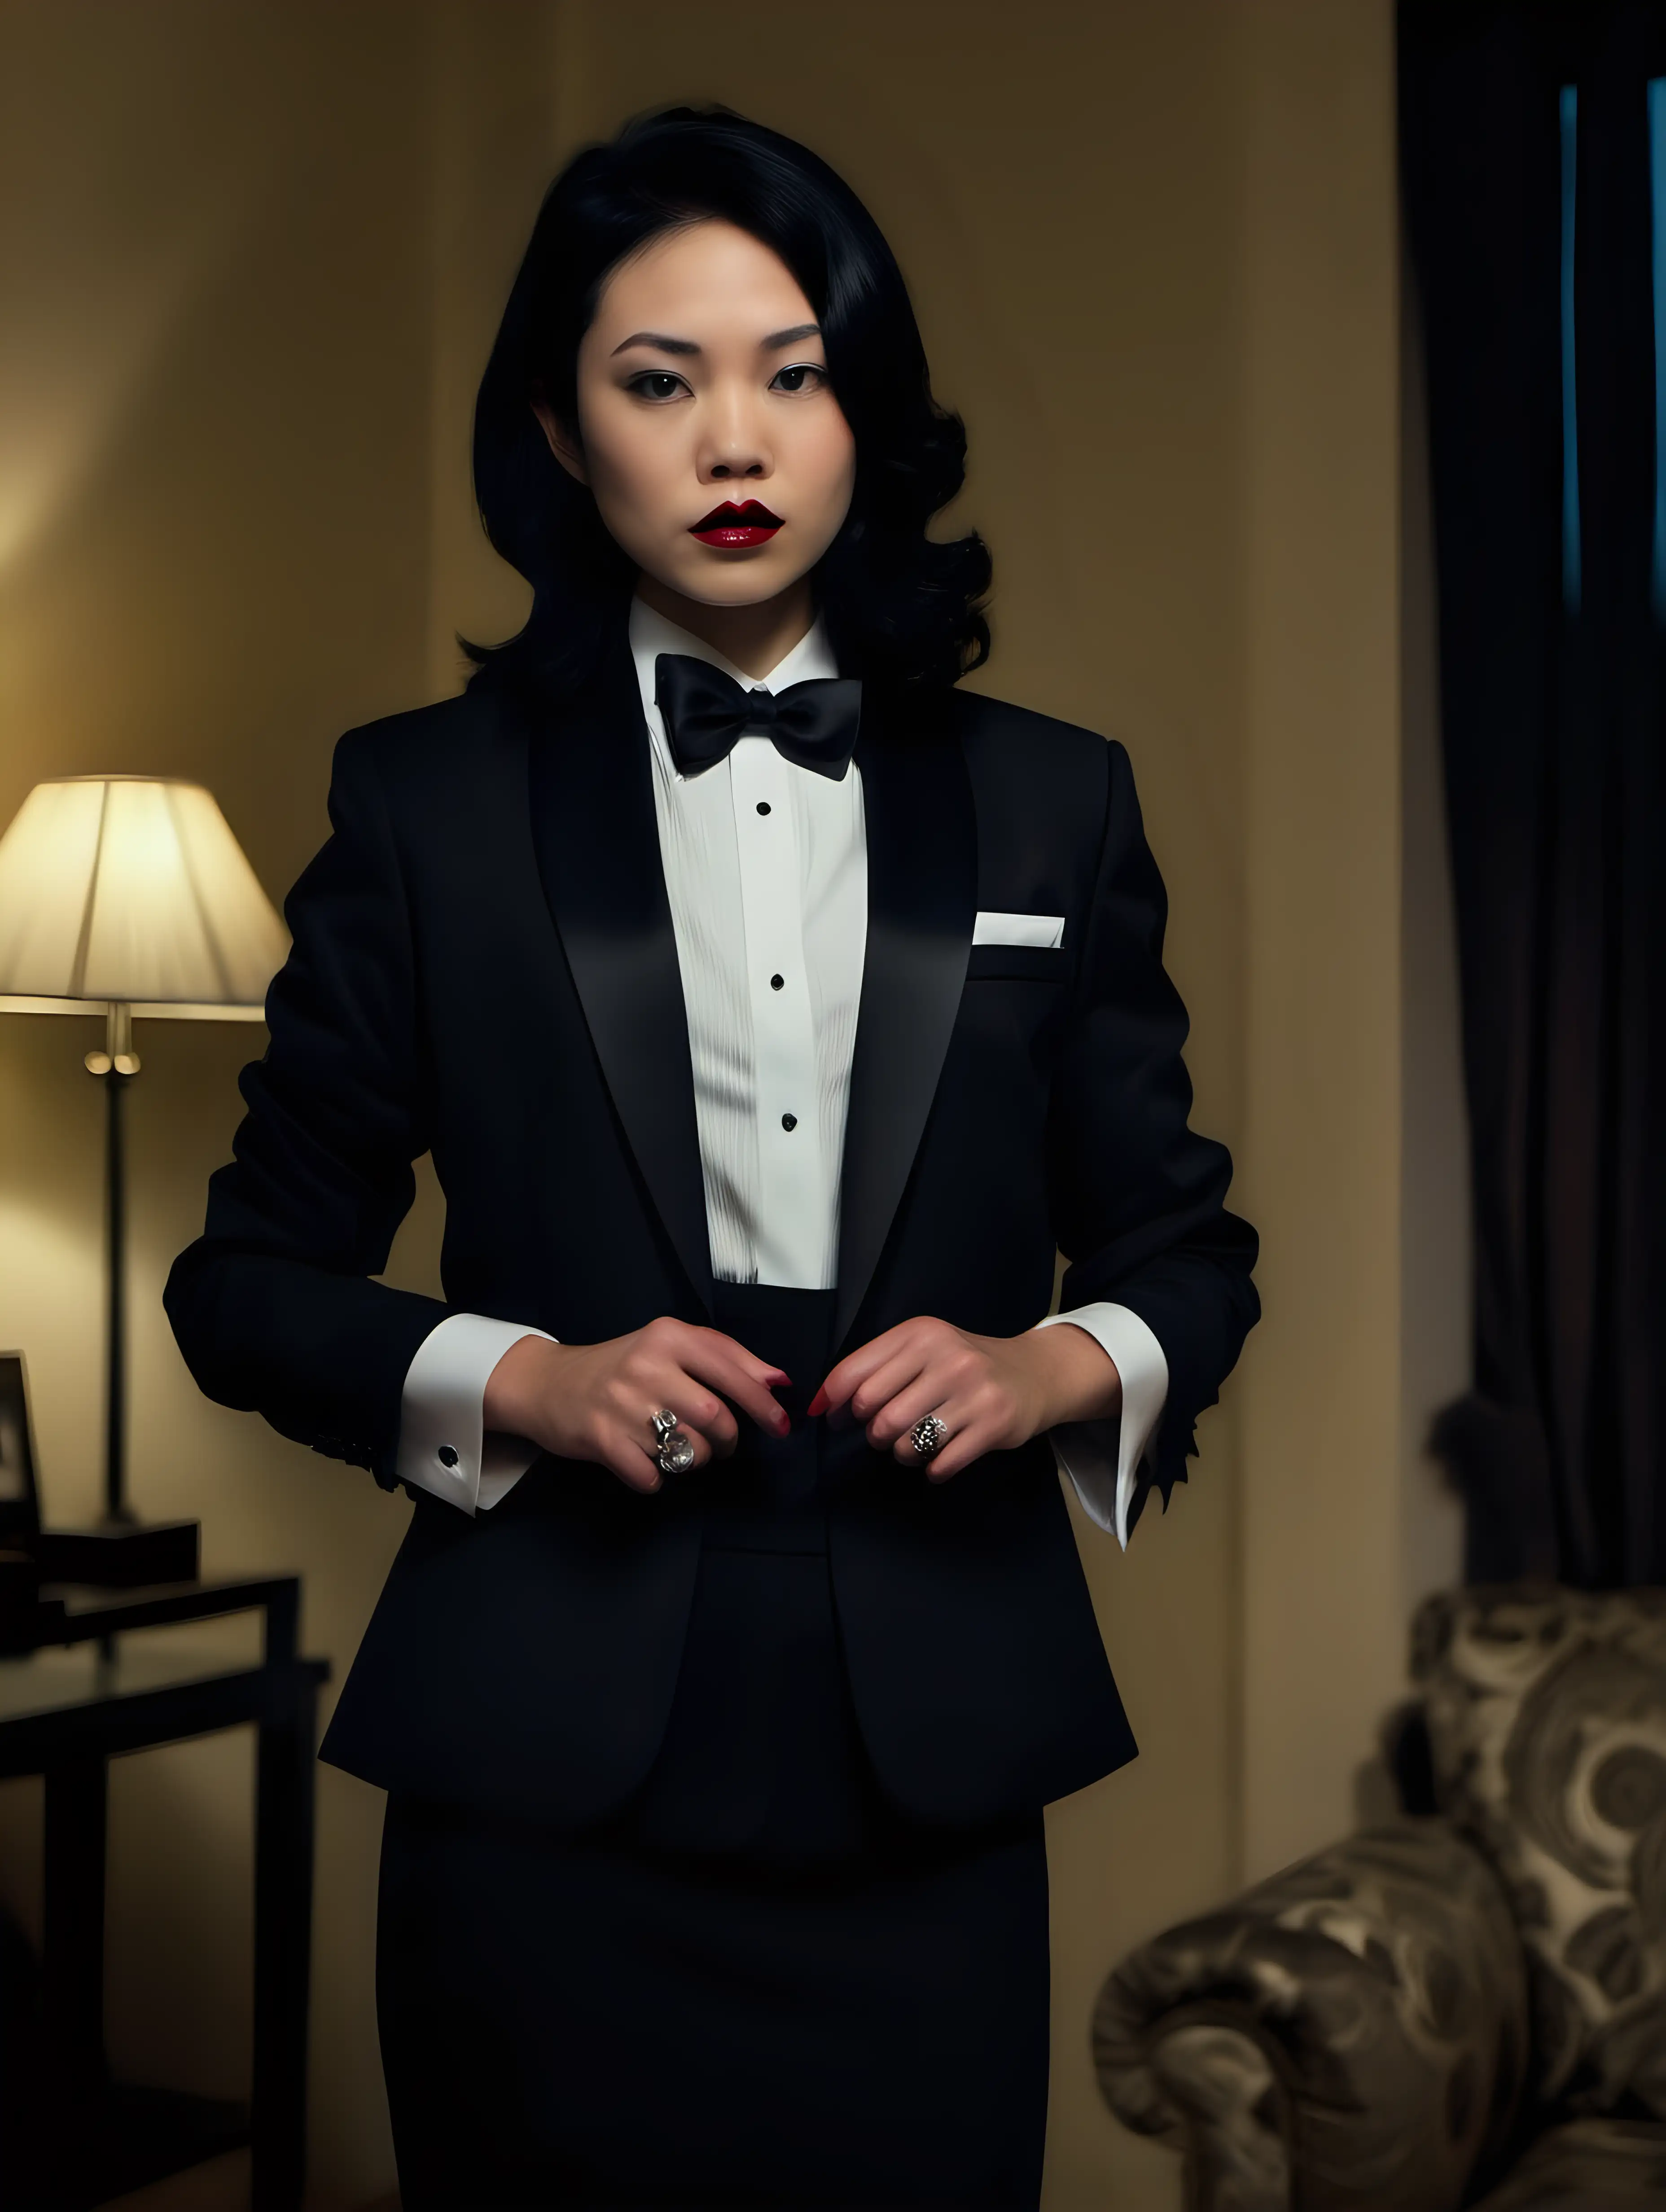 Elegant-Vietnamese-Woman-in-Black-Tuxedo-Stands-in-Night-Room